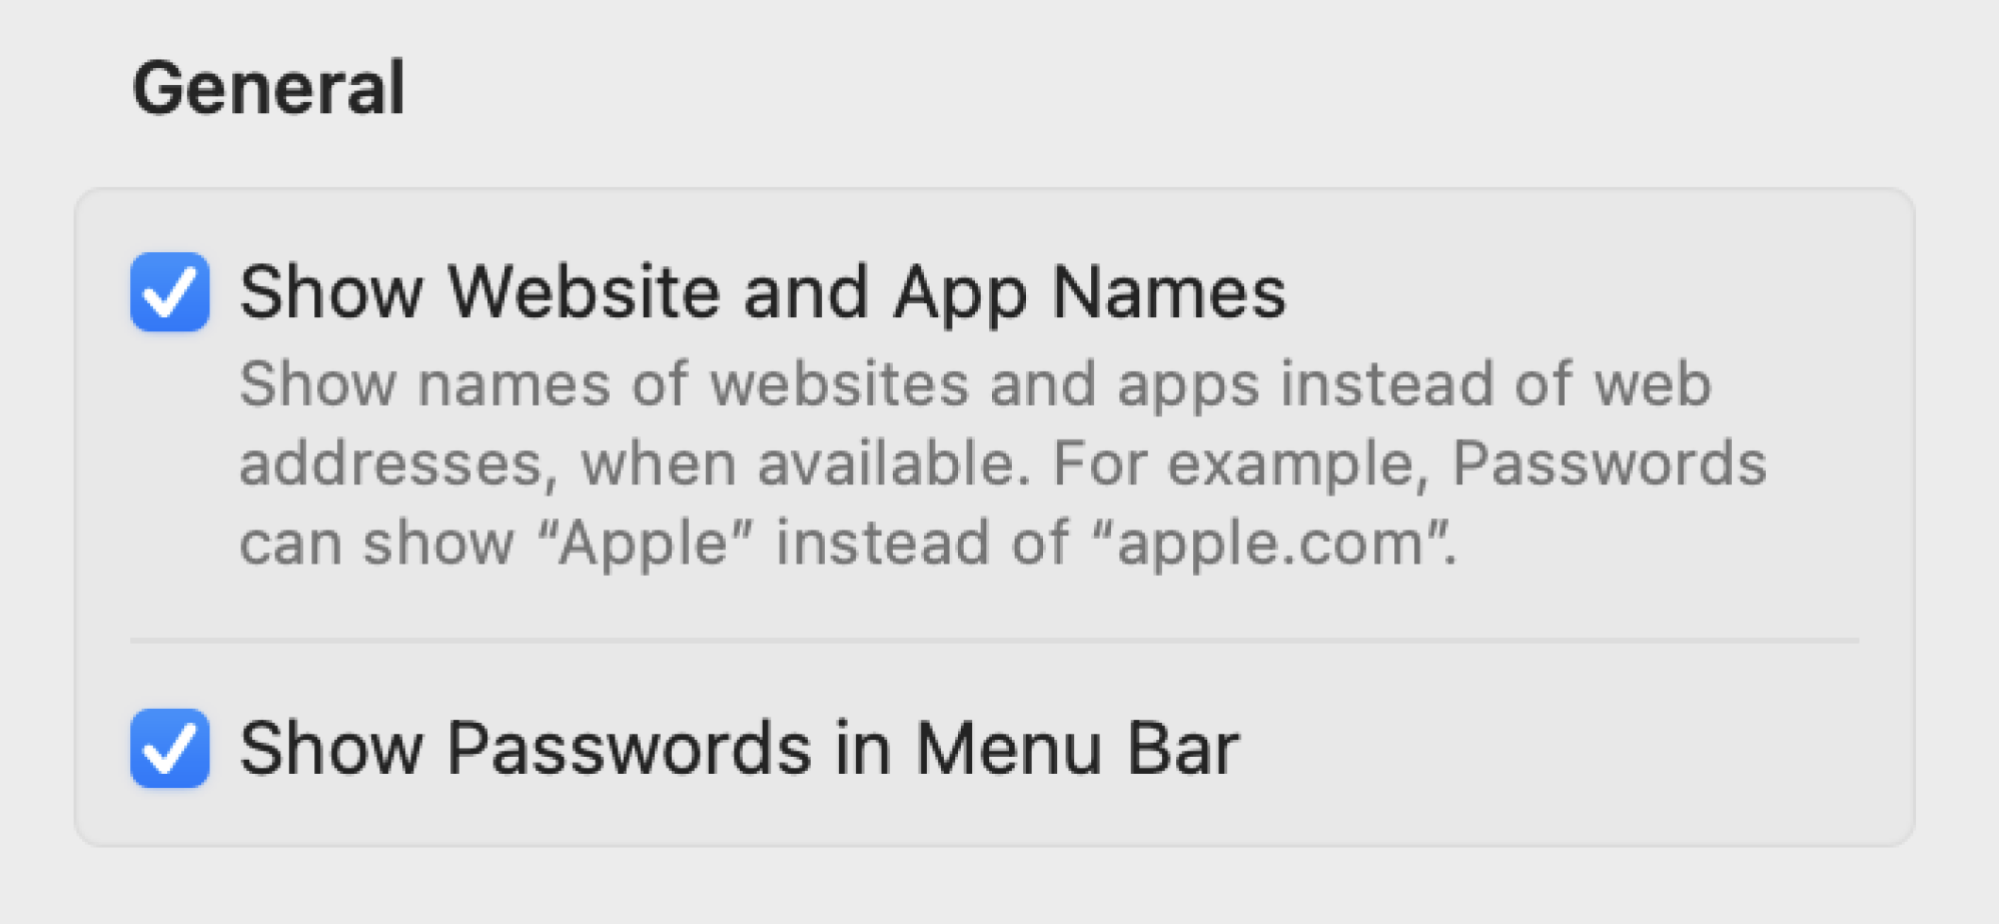 Enabling the menu bar app in Passwords app